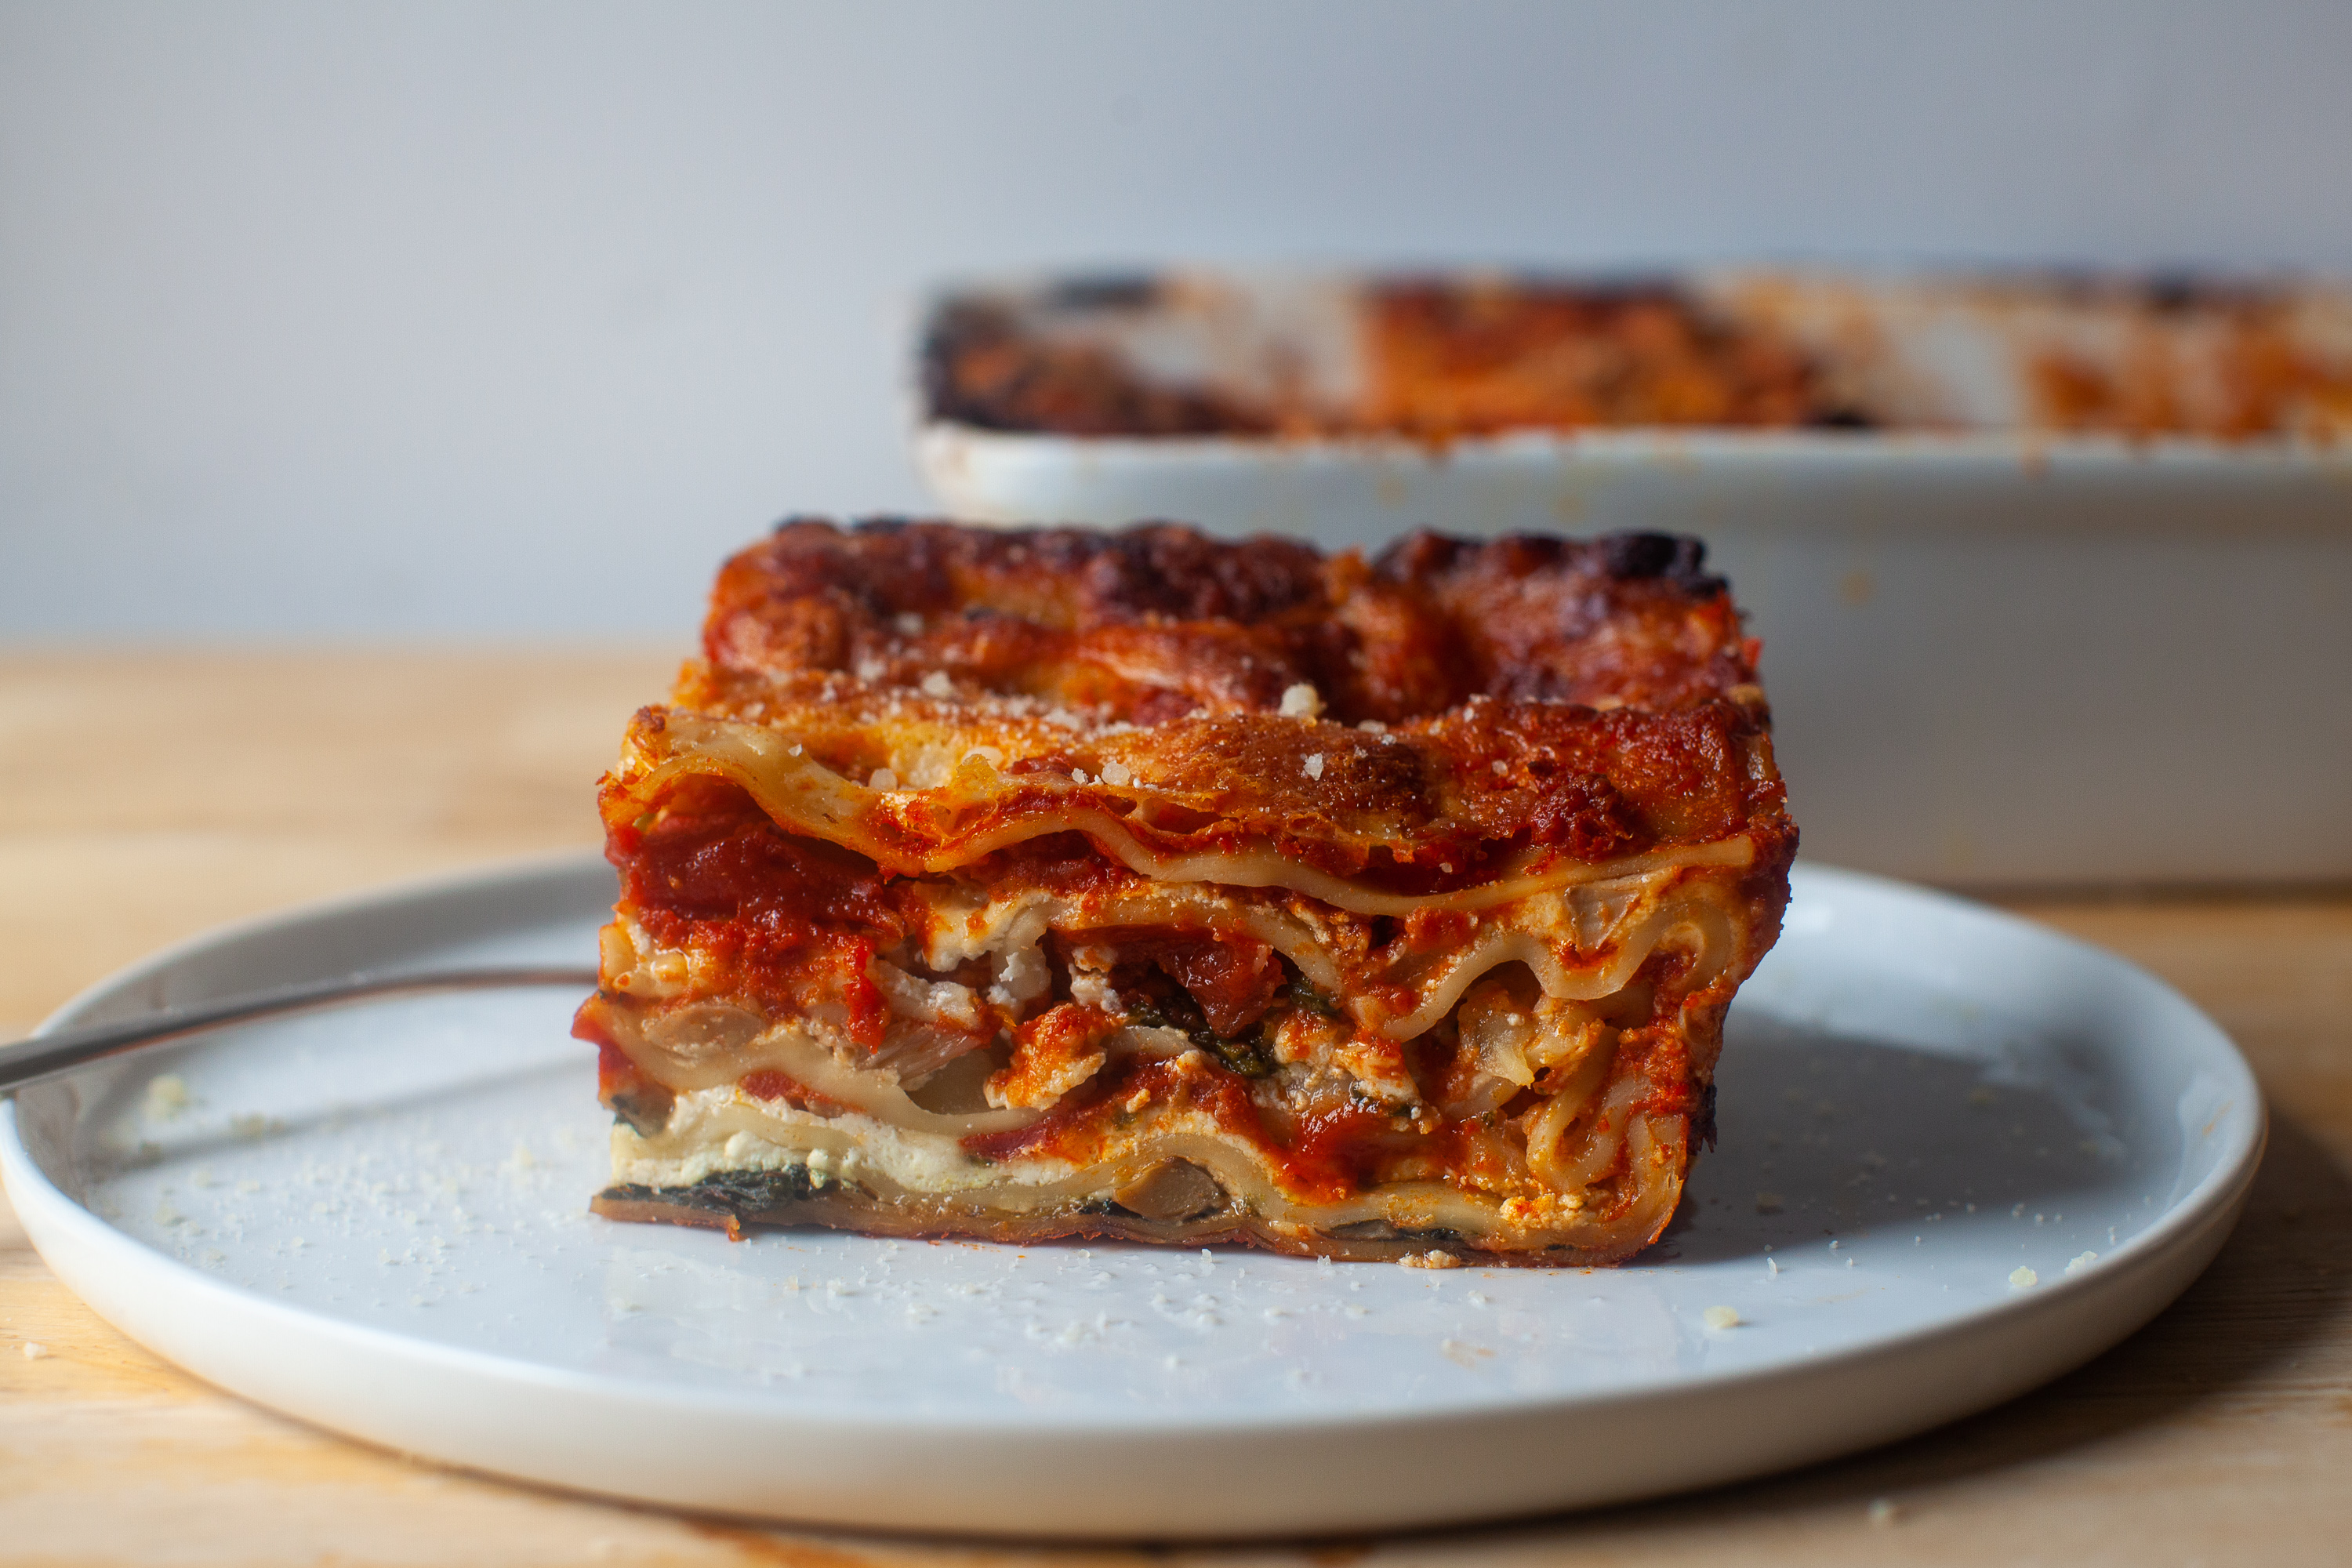 Image of Oval vegetable lasagna